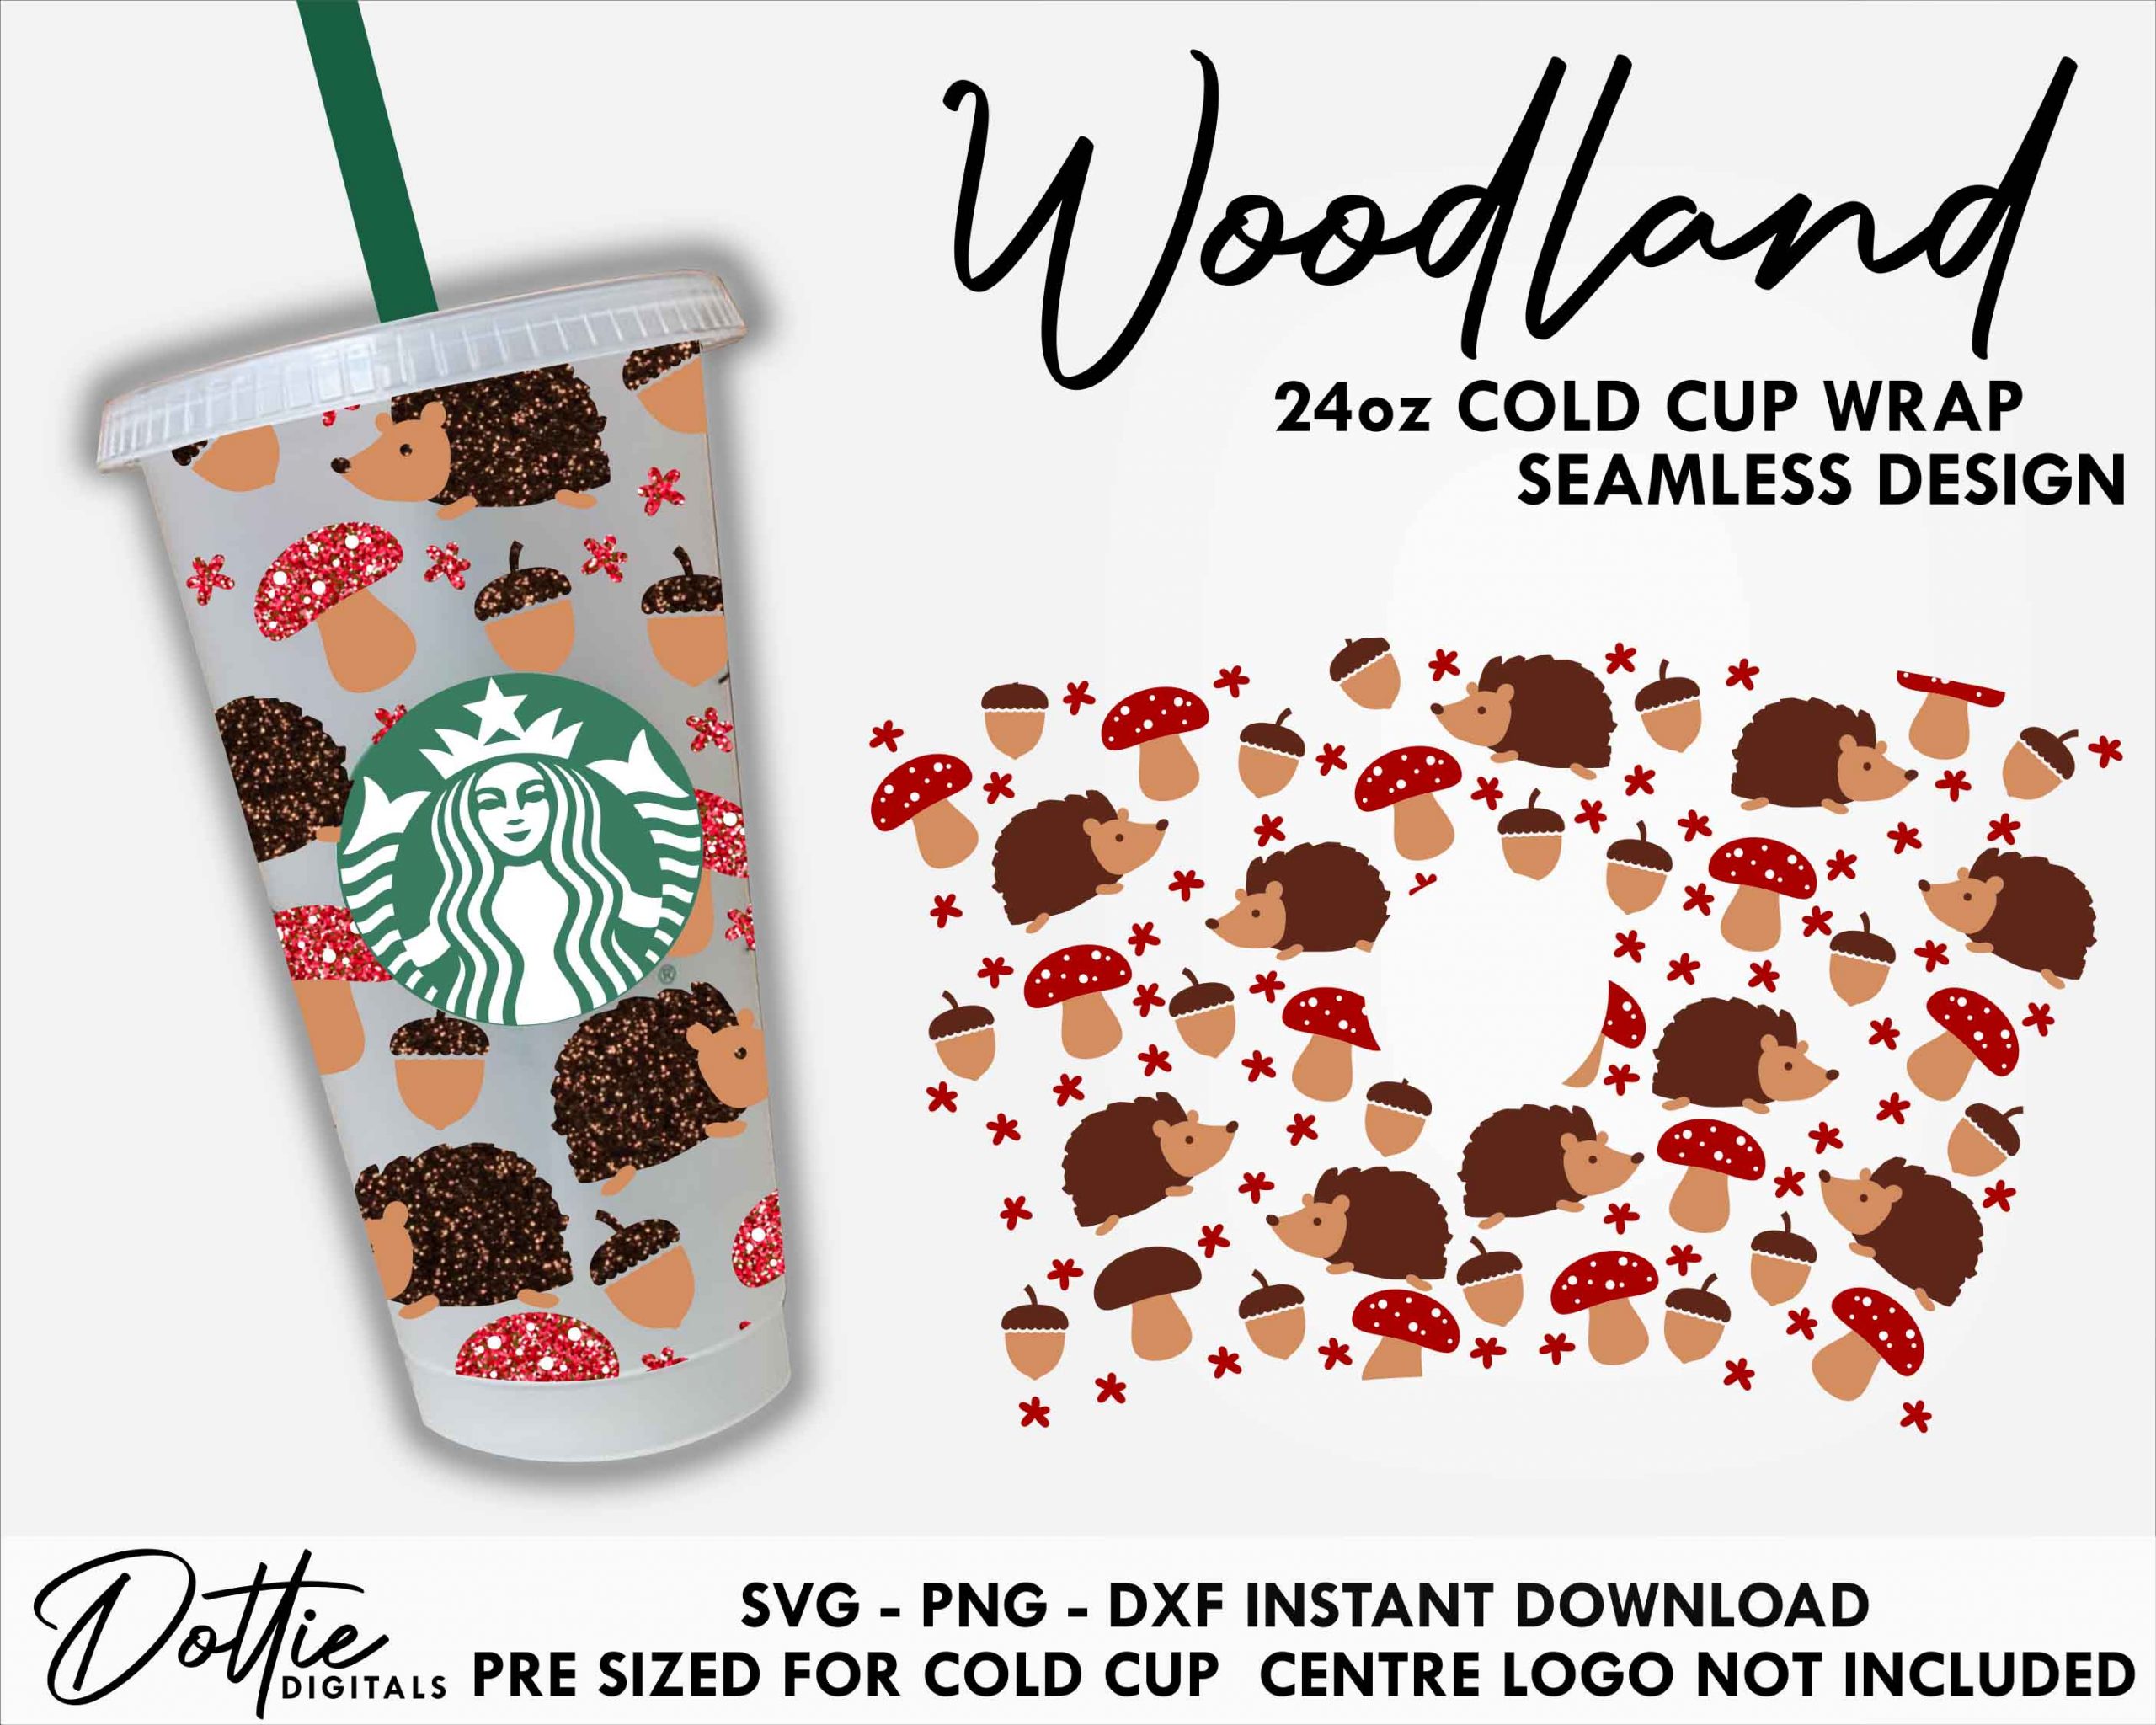 Mushroom Starbucks Wrap svg, Starbucks cold cup SVG, Layered SVG, Starbucks  cricut, 24 OZ Starbucks Wrap